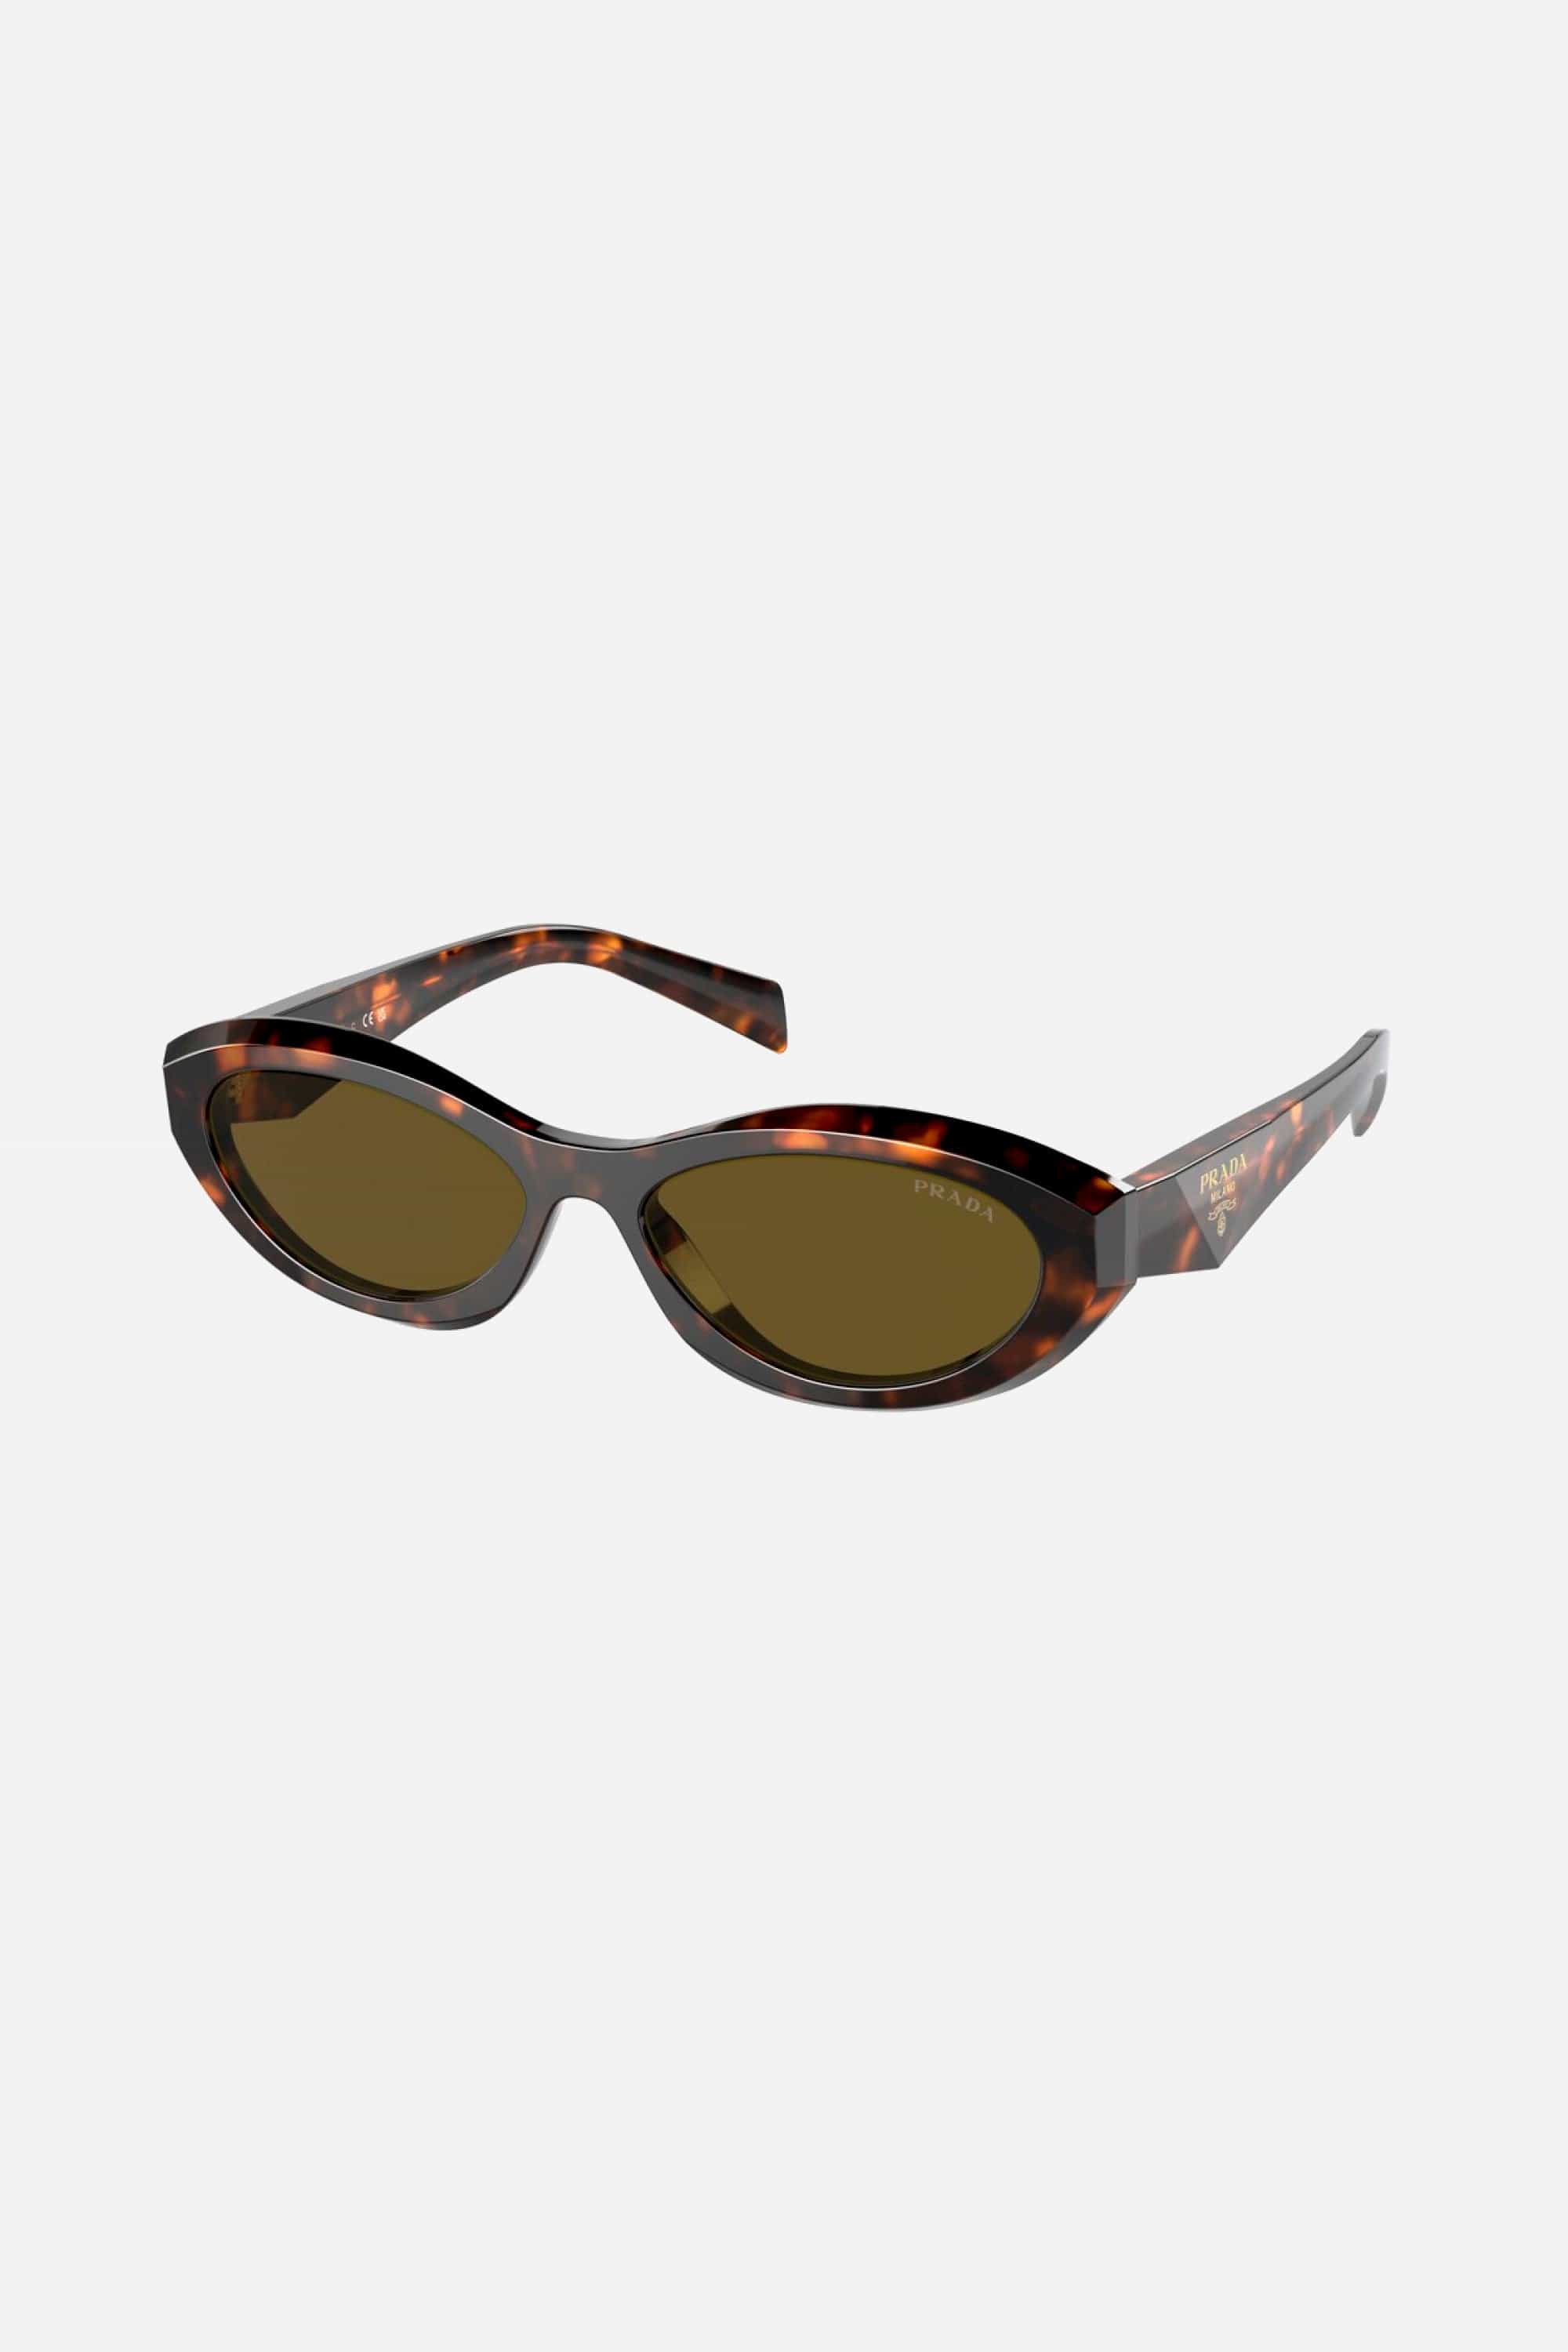 Prada PR26ZS havana oval sunglasses - Eyewear Club